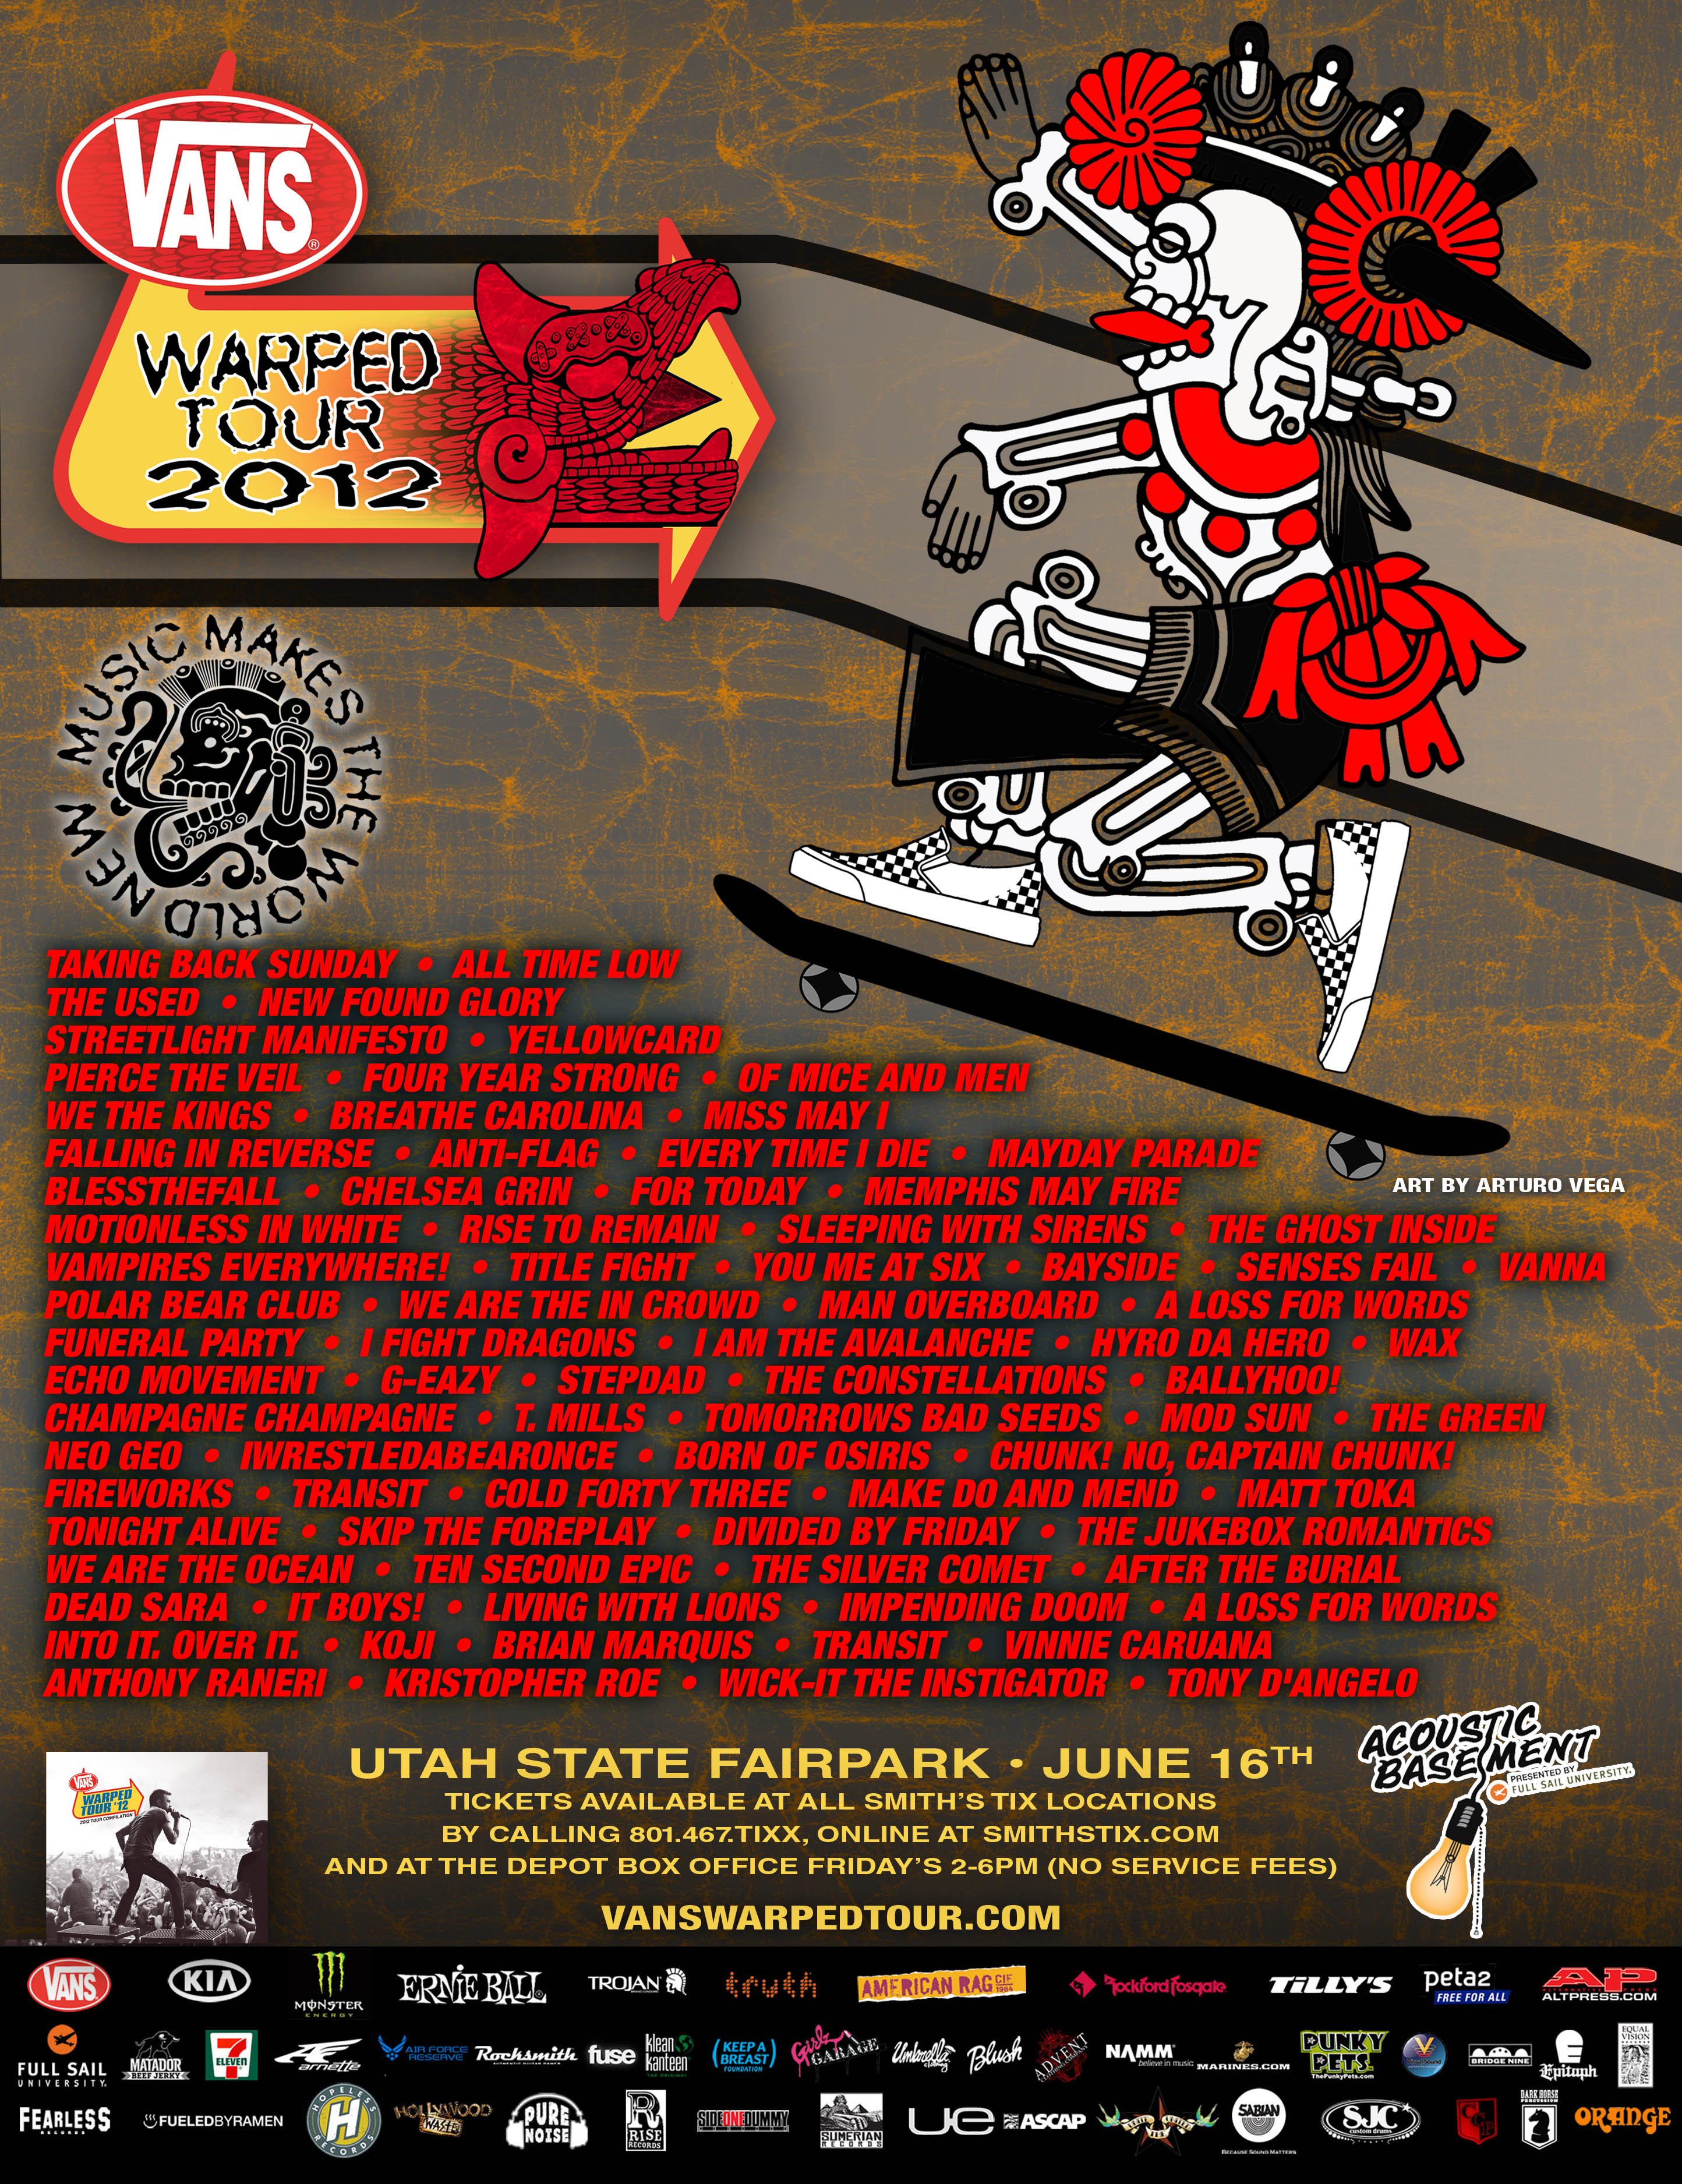 Vans Warped Tour at Comcast Center (Mansfield) on 19 Jul 2012 | Last.fm